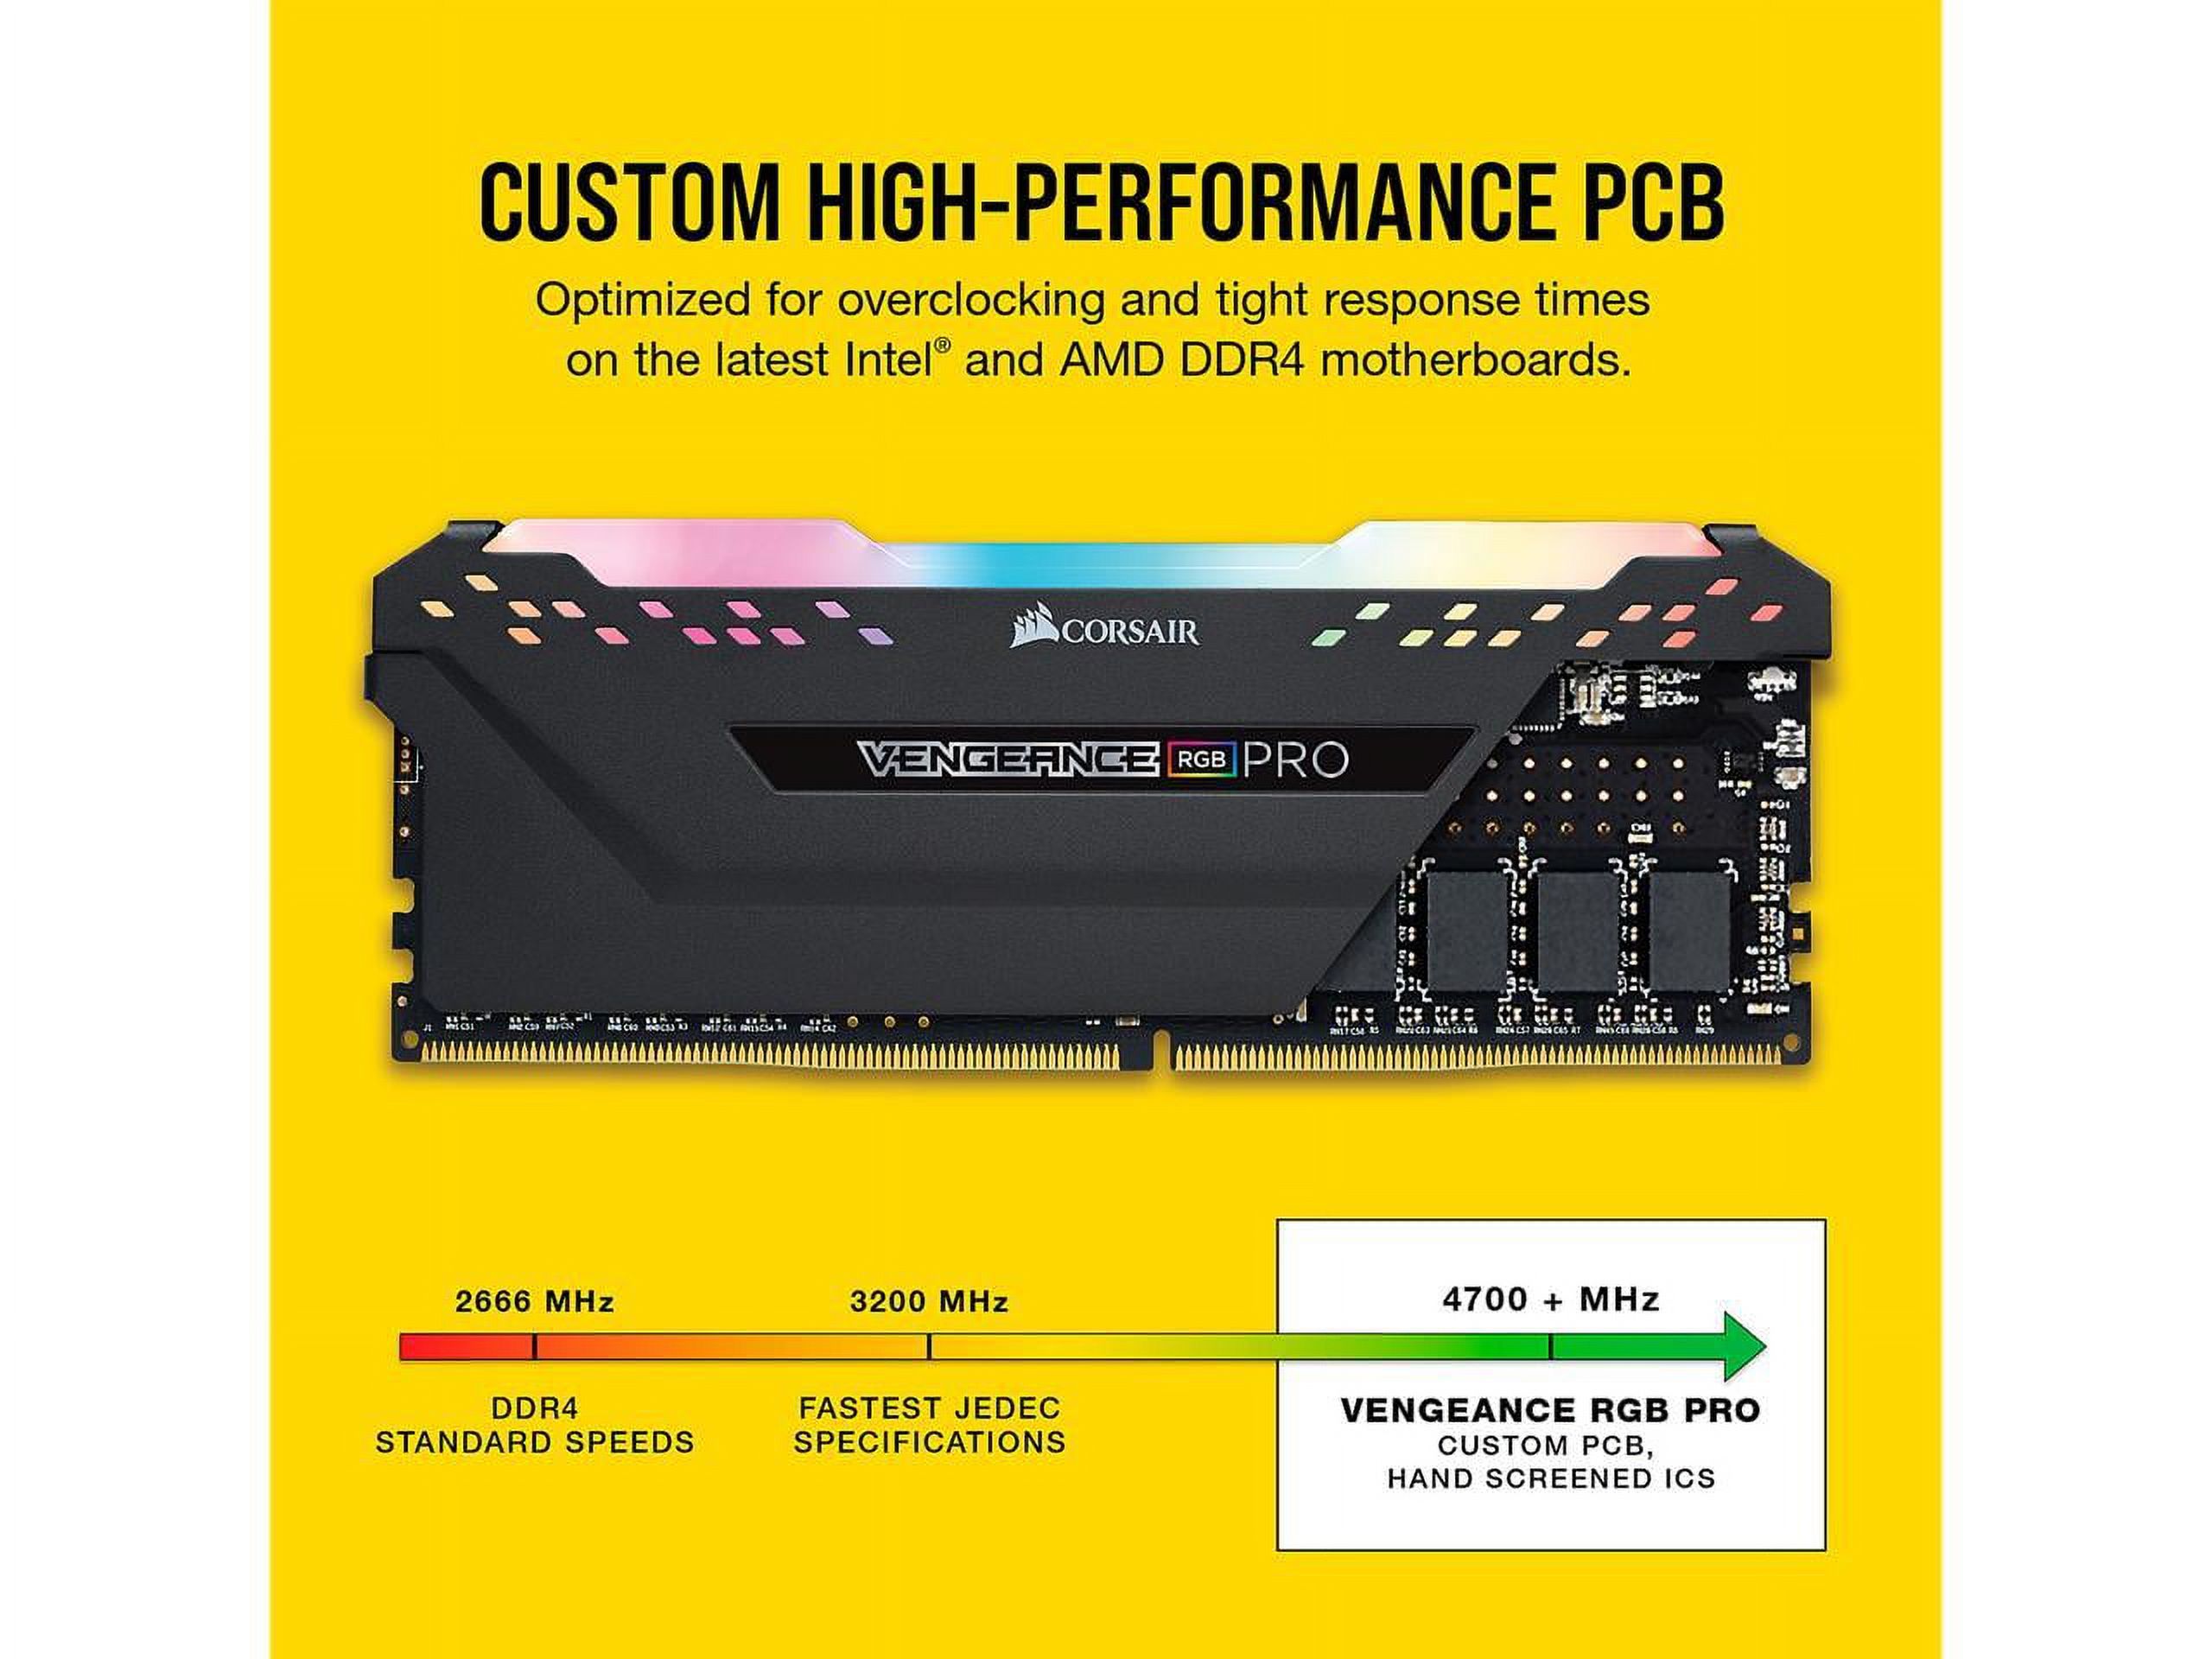 Corsair Vengeance RGB PRO 16GB (2x8GB) DDR4 3200MHz C16 LED Desktop Memory - Black - image 5 of 6